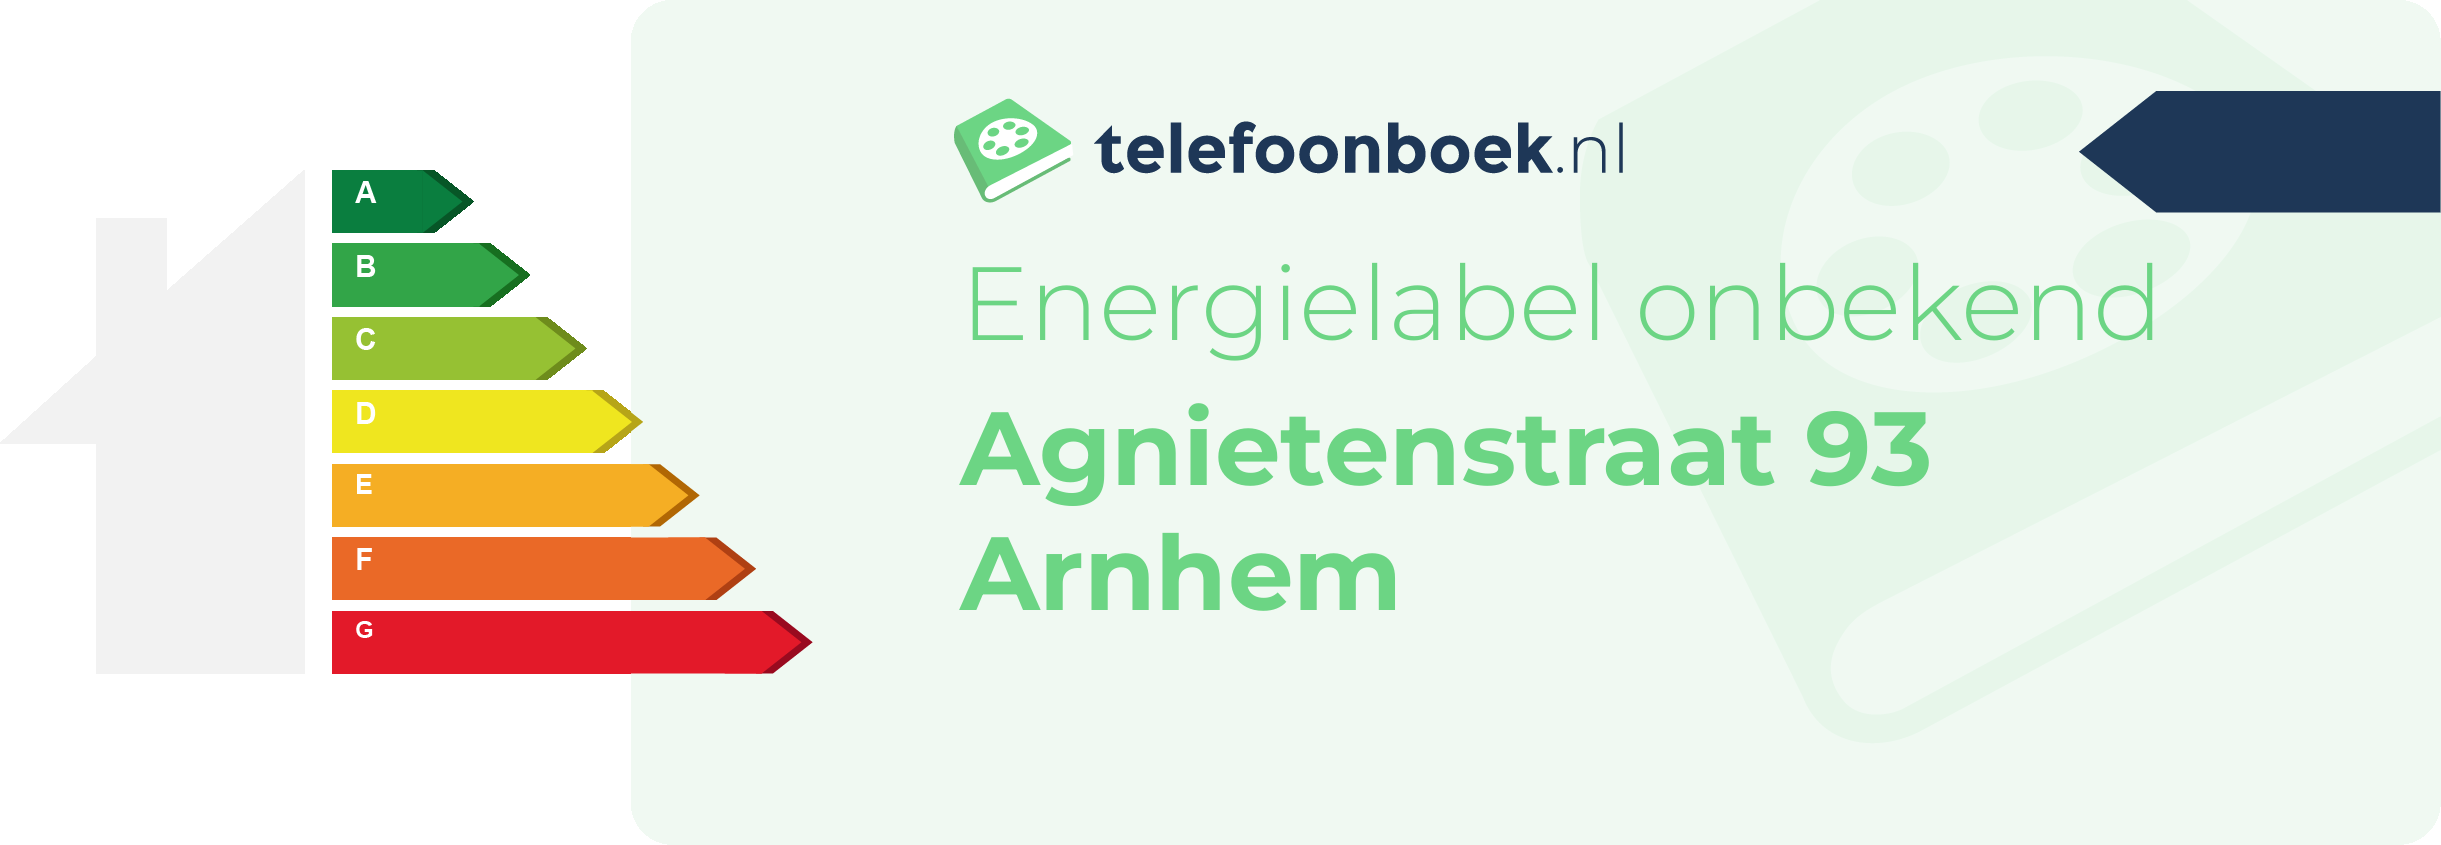 Energielabel Agnietenstraat 93 Arnhem